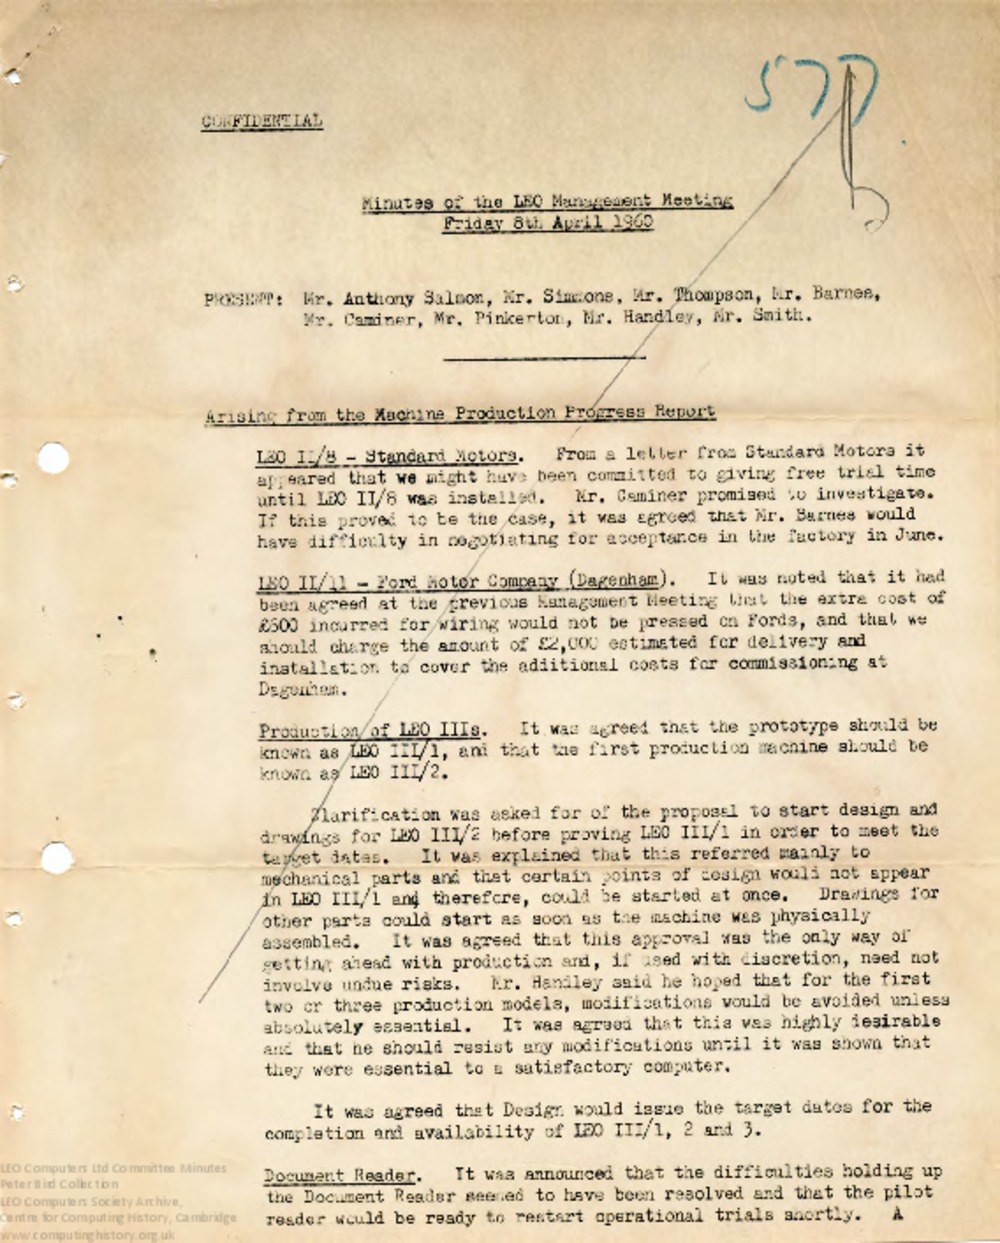 Article: 64397 LEO Management Meeting, 1960 second quarter (Apr-June 1960)